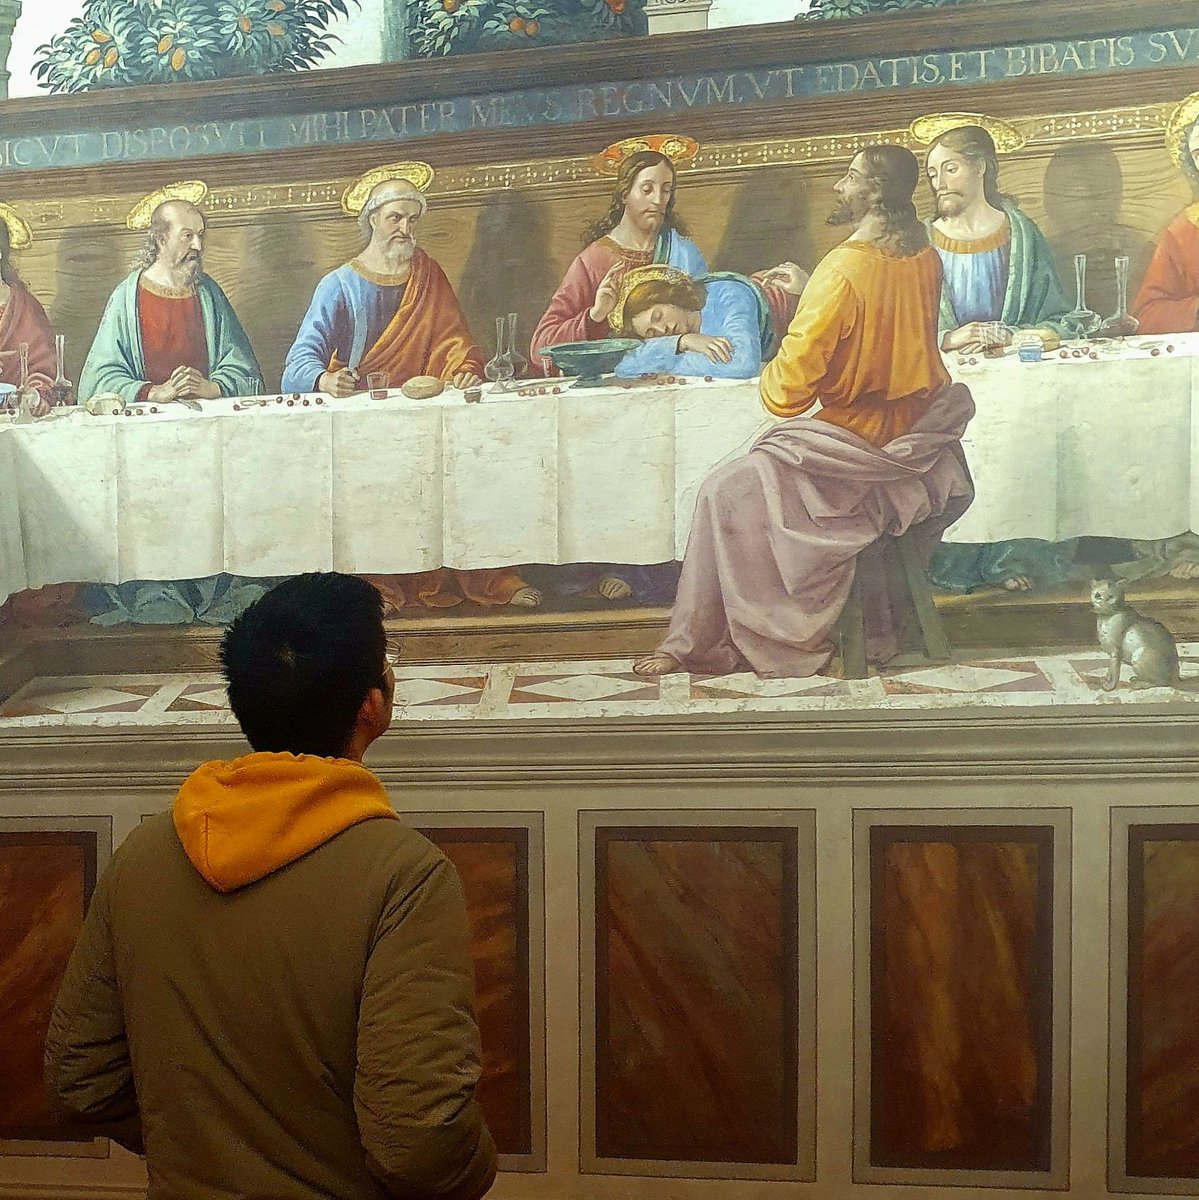 #museumlife #vitadimuseo
Domenico Ghirlandaio, Ultima Cena  (The Last Supper)
#MinisterodellaCultura #mic_italia
#MiC
#museitaliani
#Direzionemuseitoscana 
#museodisanmarco 
#ghirlandaio 
@mic_italia
@museitaliani